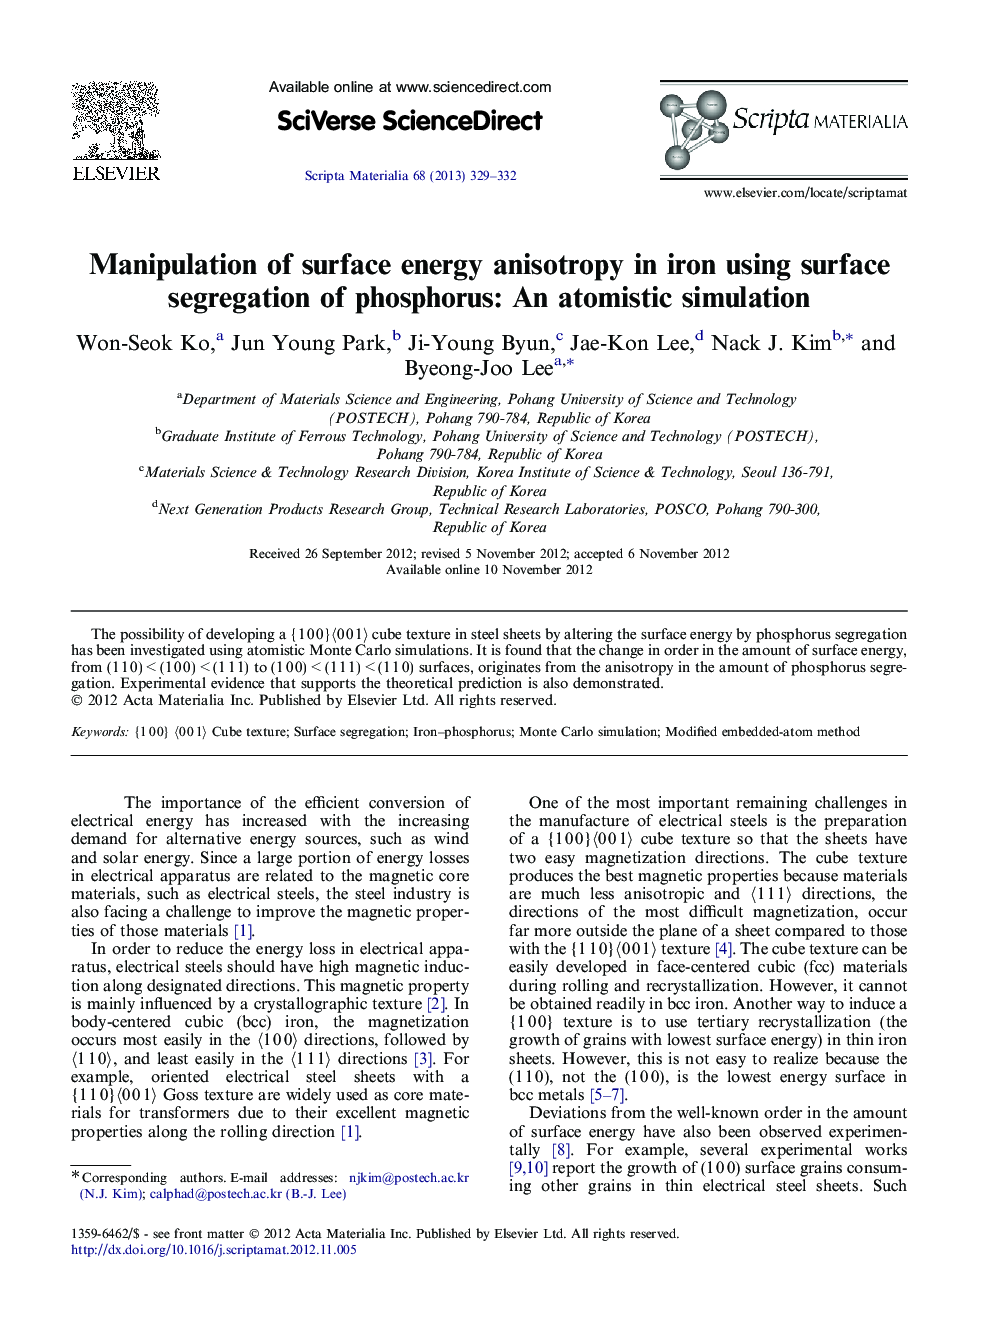 Manipulation of surface energy anisotropy in iron using surface segregation of phosphorus: An atomistic simulation